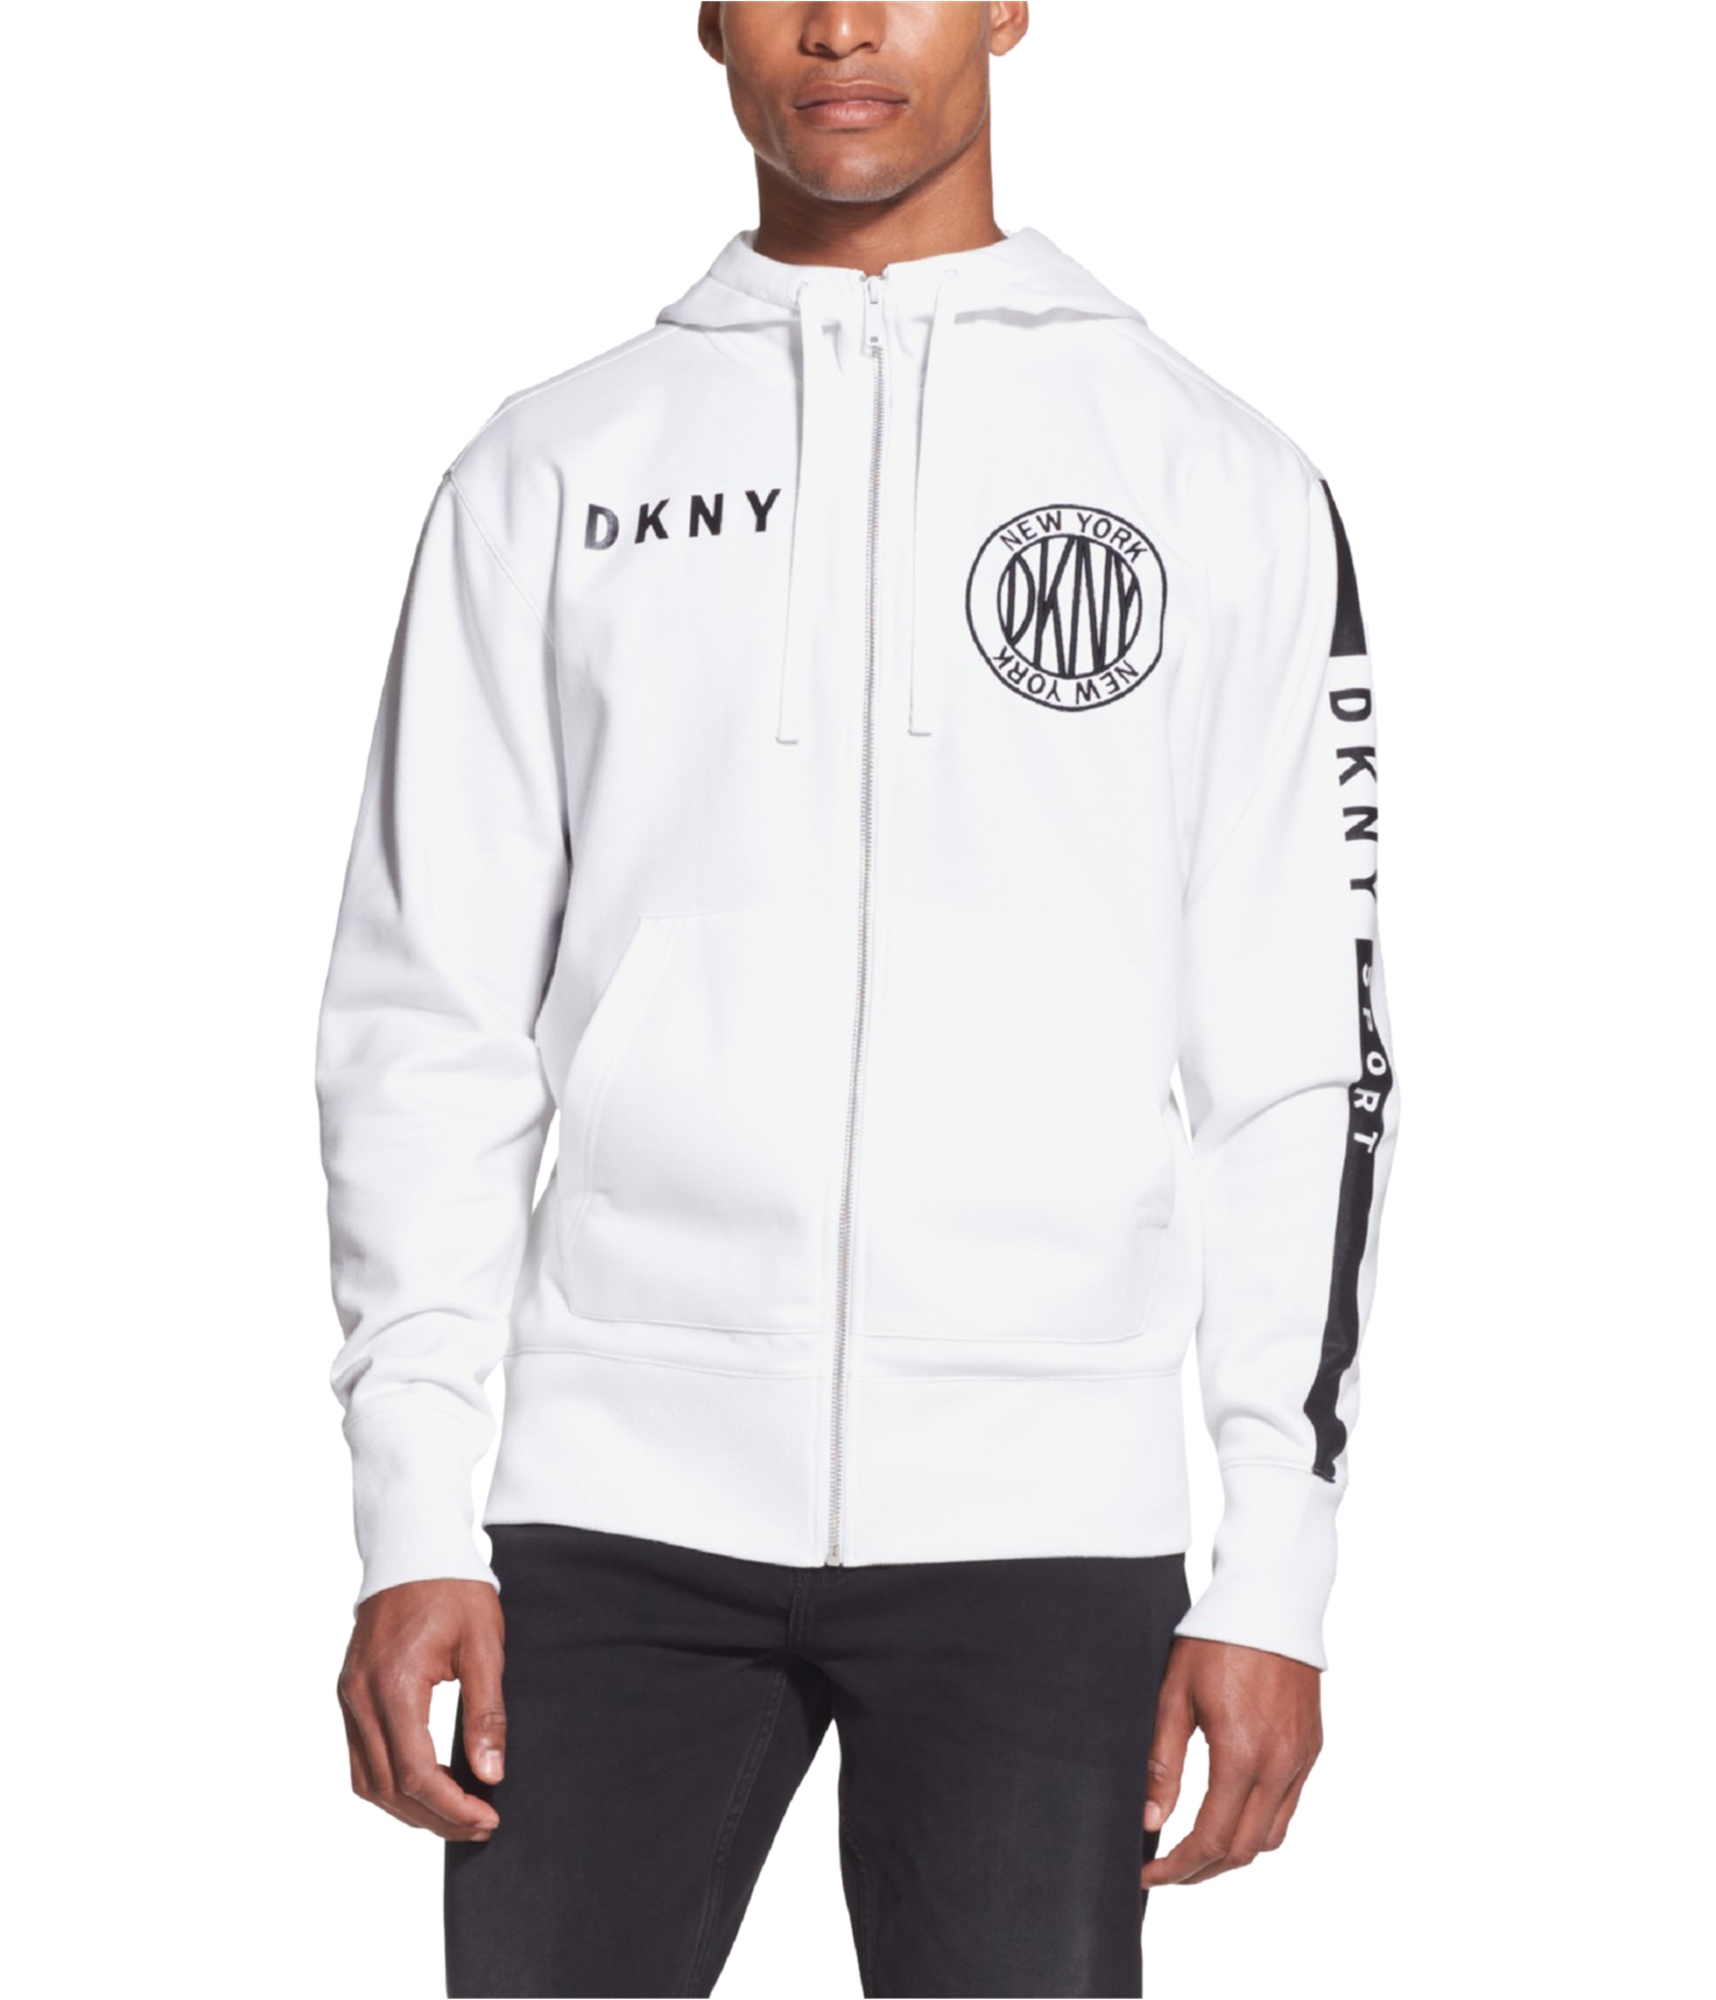 DKNY Mens Logo Hoodie Sweatshirt, White, Large | eBay